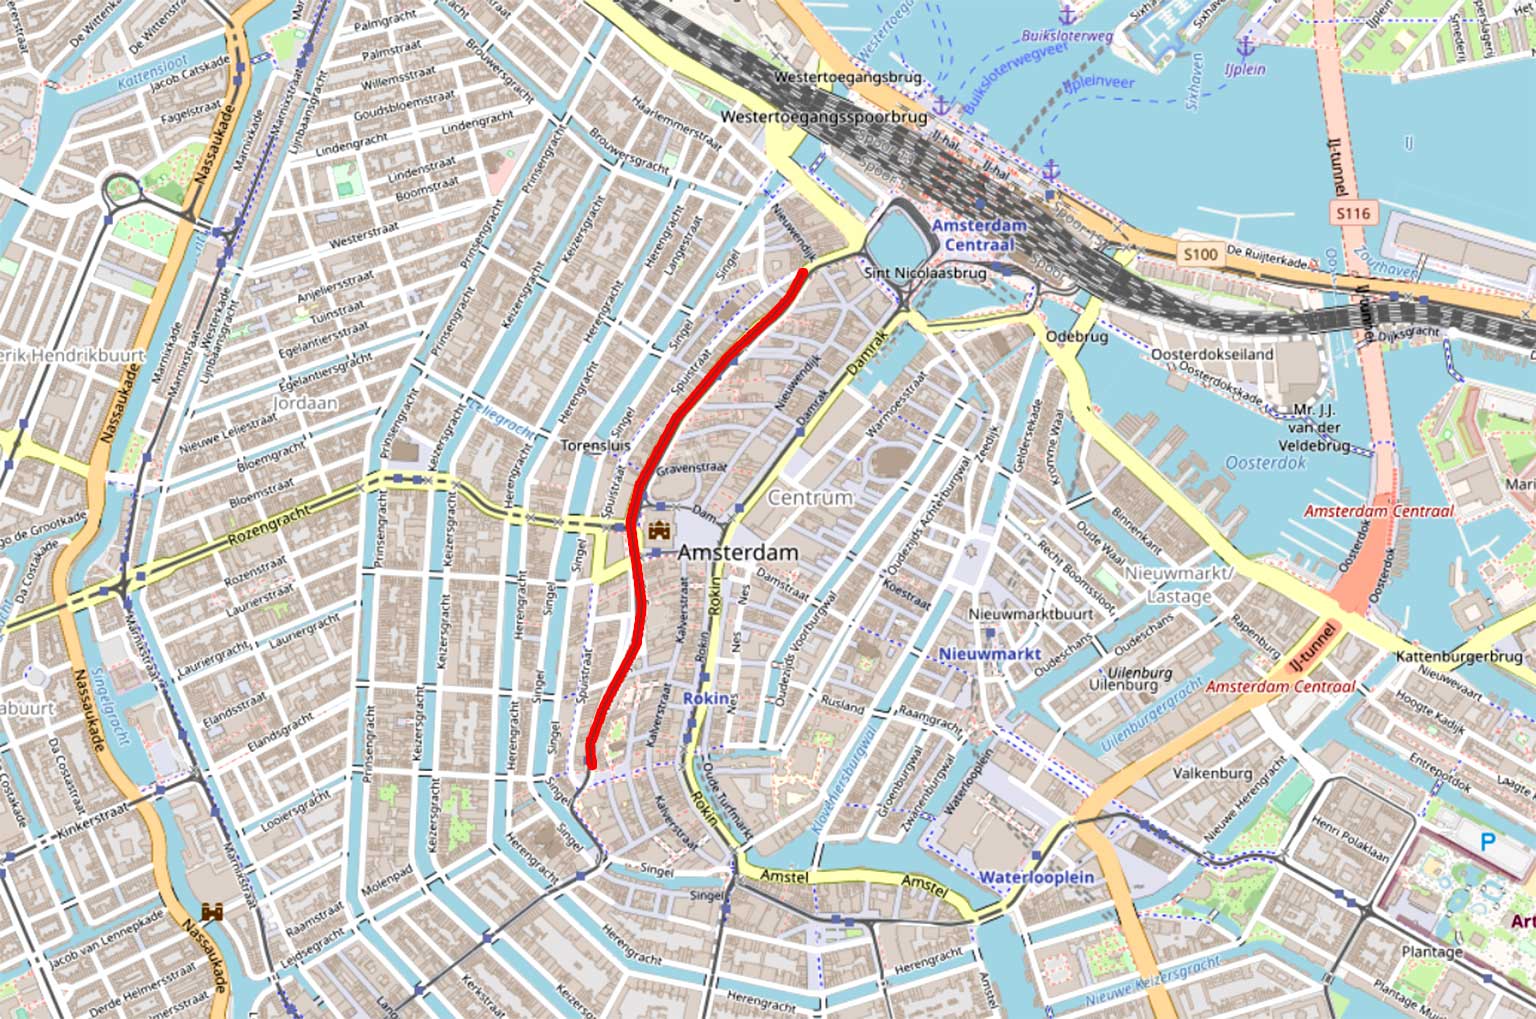 Location of Nieuwezijds Voorburgwal, Amsterdam, on today's map